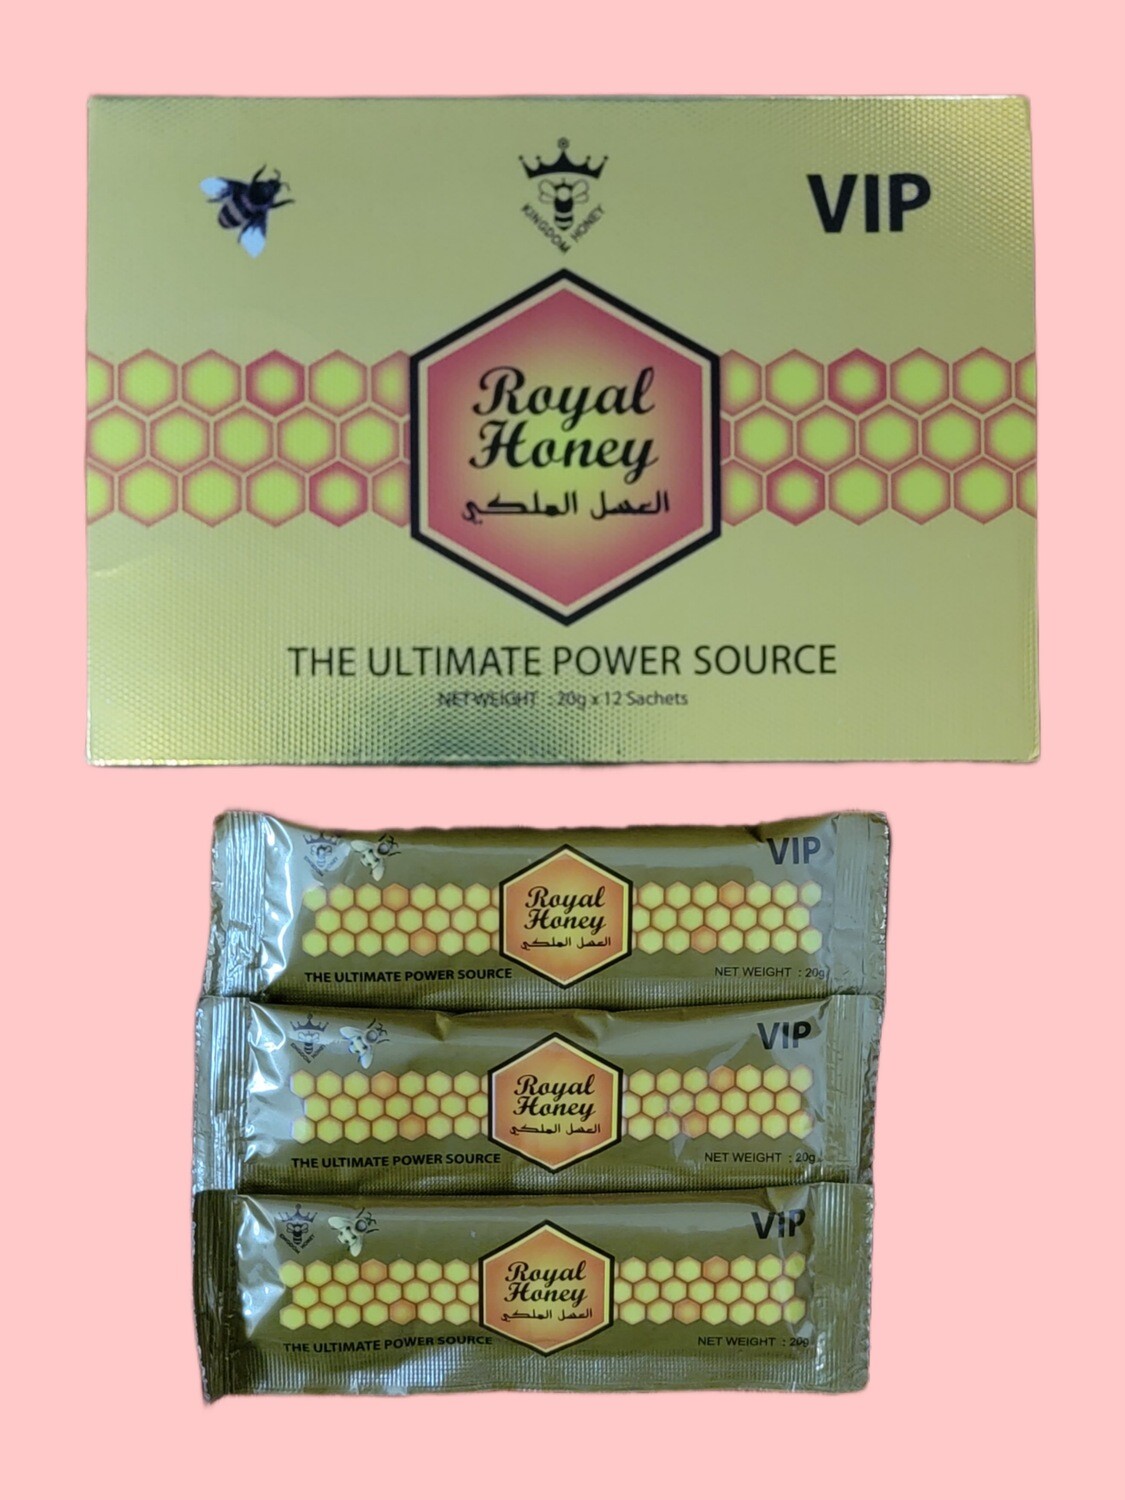 Kingdom Royal Honey VIP (Yellow Wings) [Multiple Boxes]